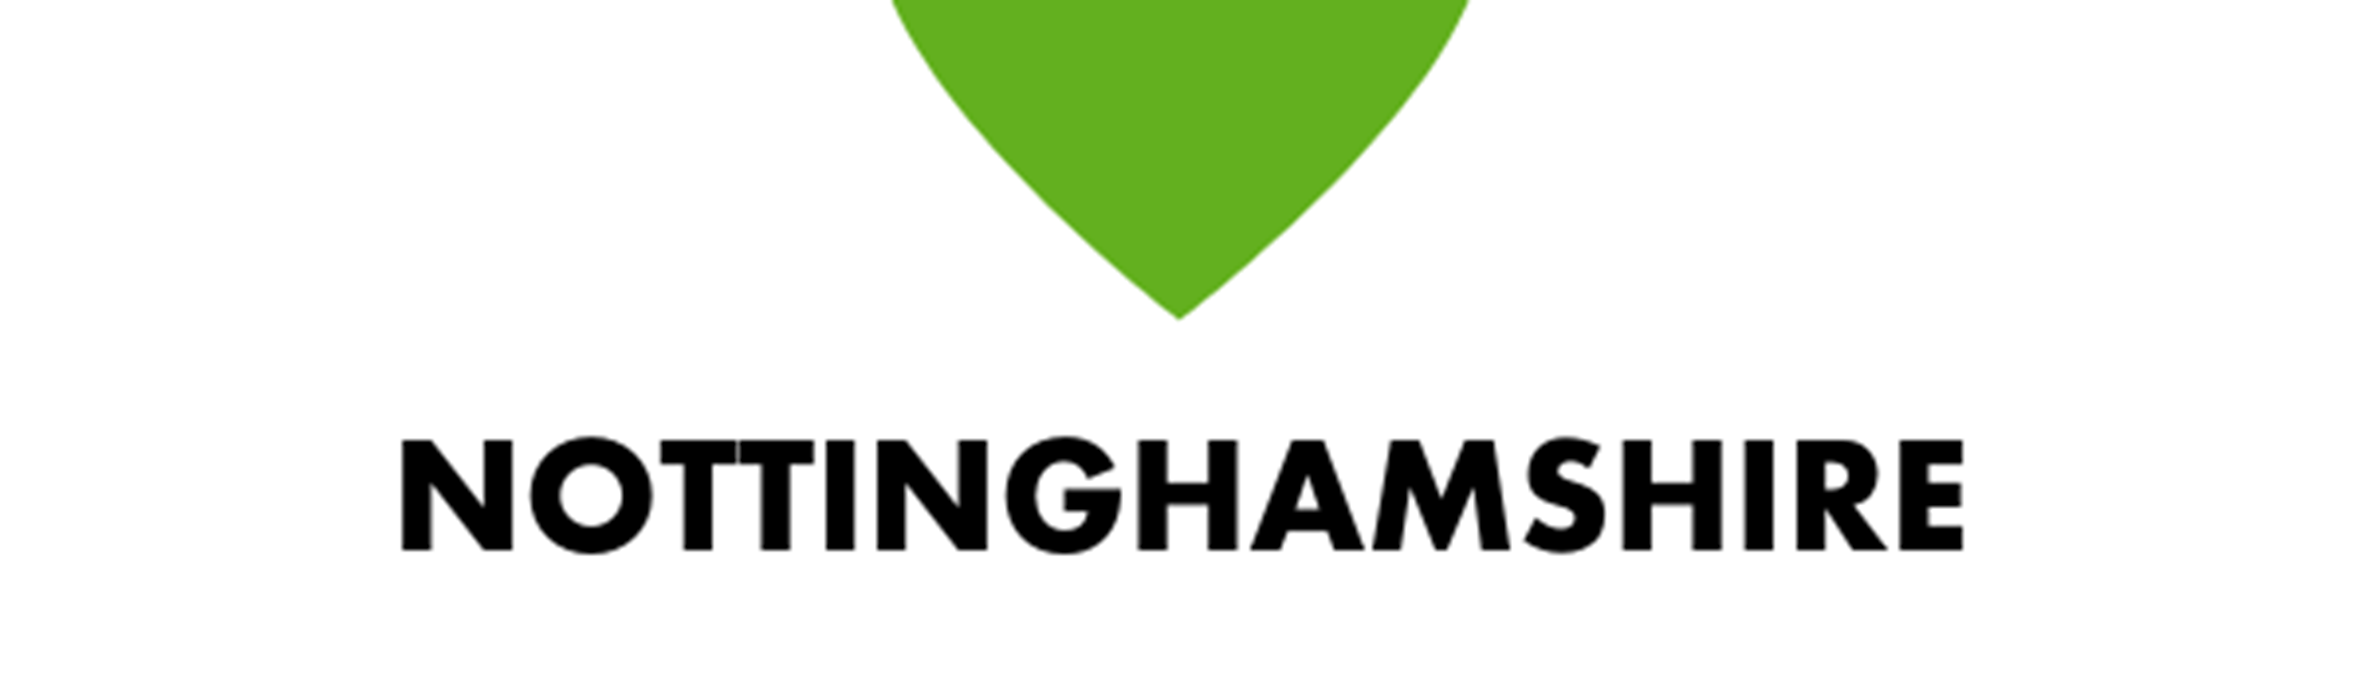 We love Nottinghamshire